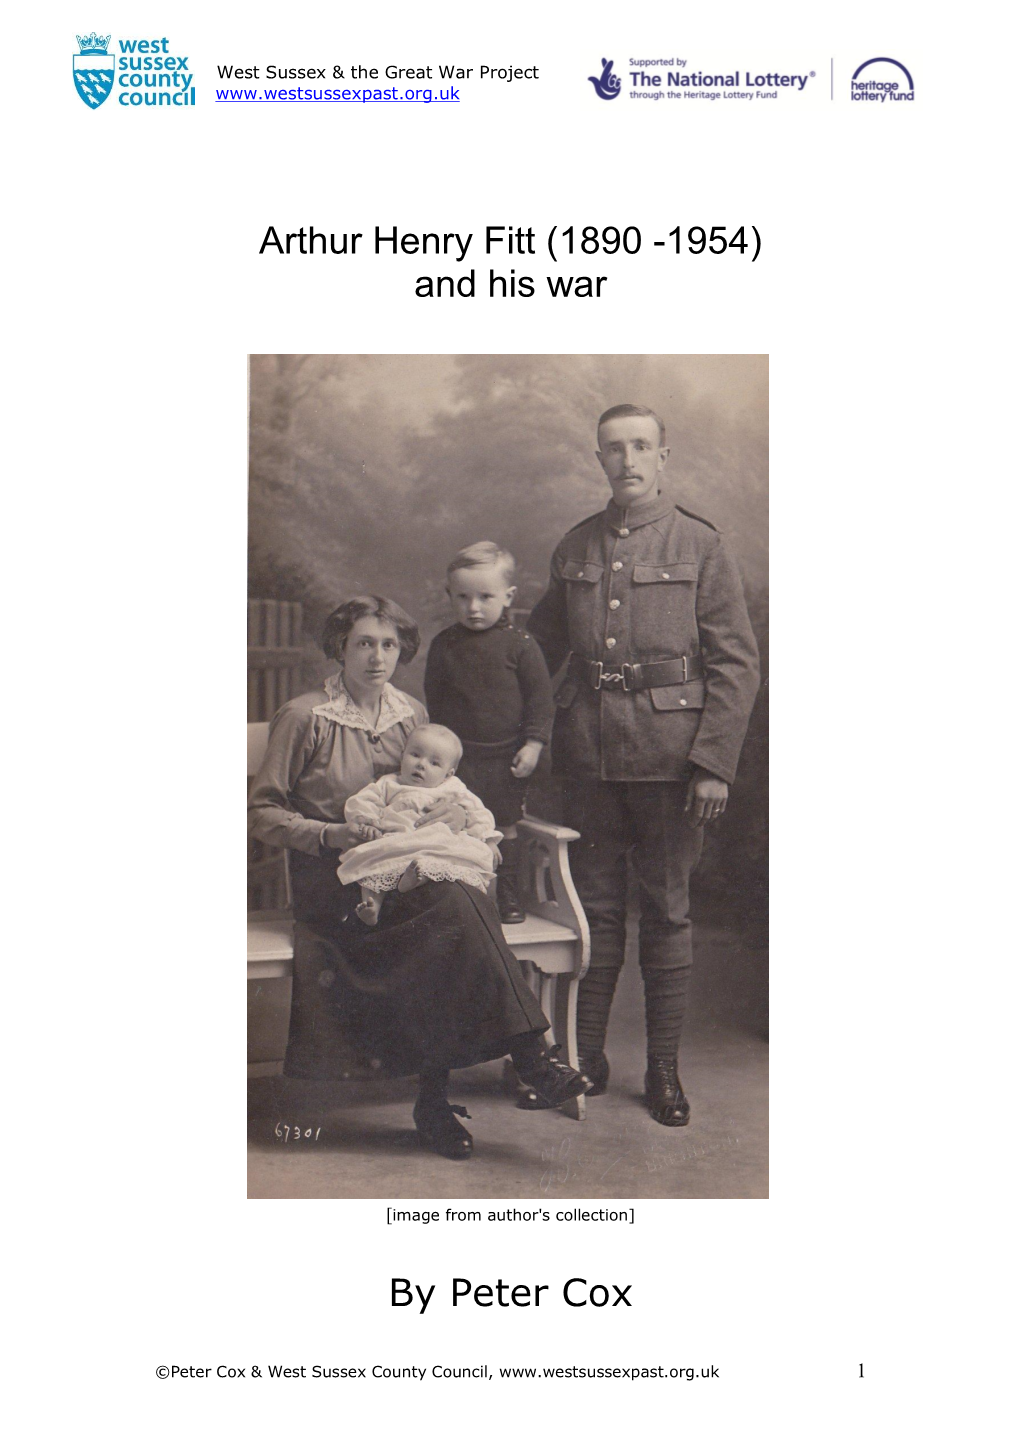 Arthur Henry Fitt (1890 -1954) and His War